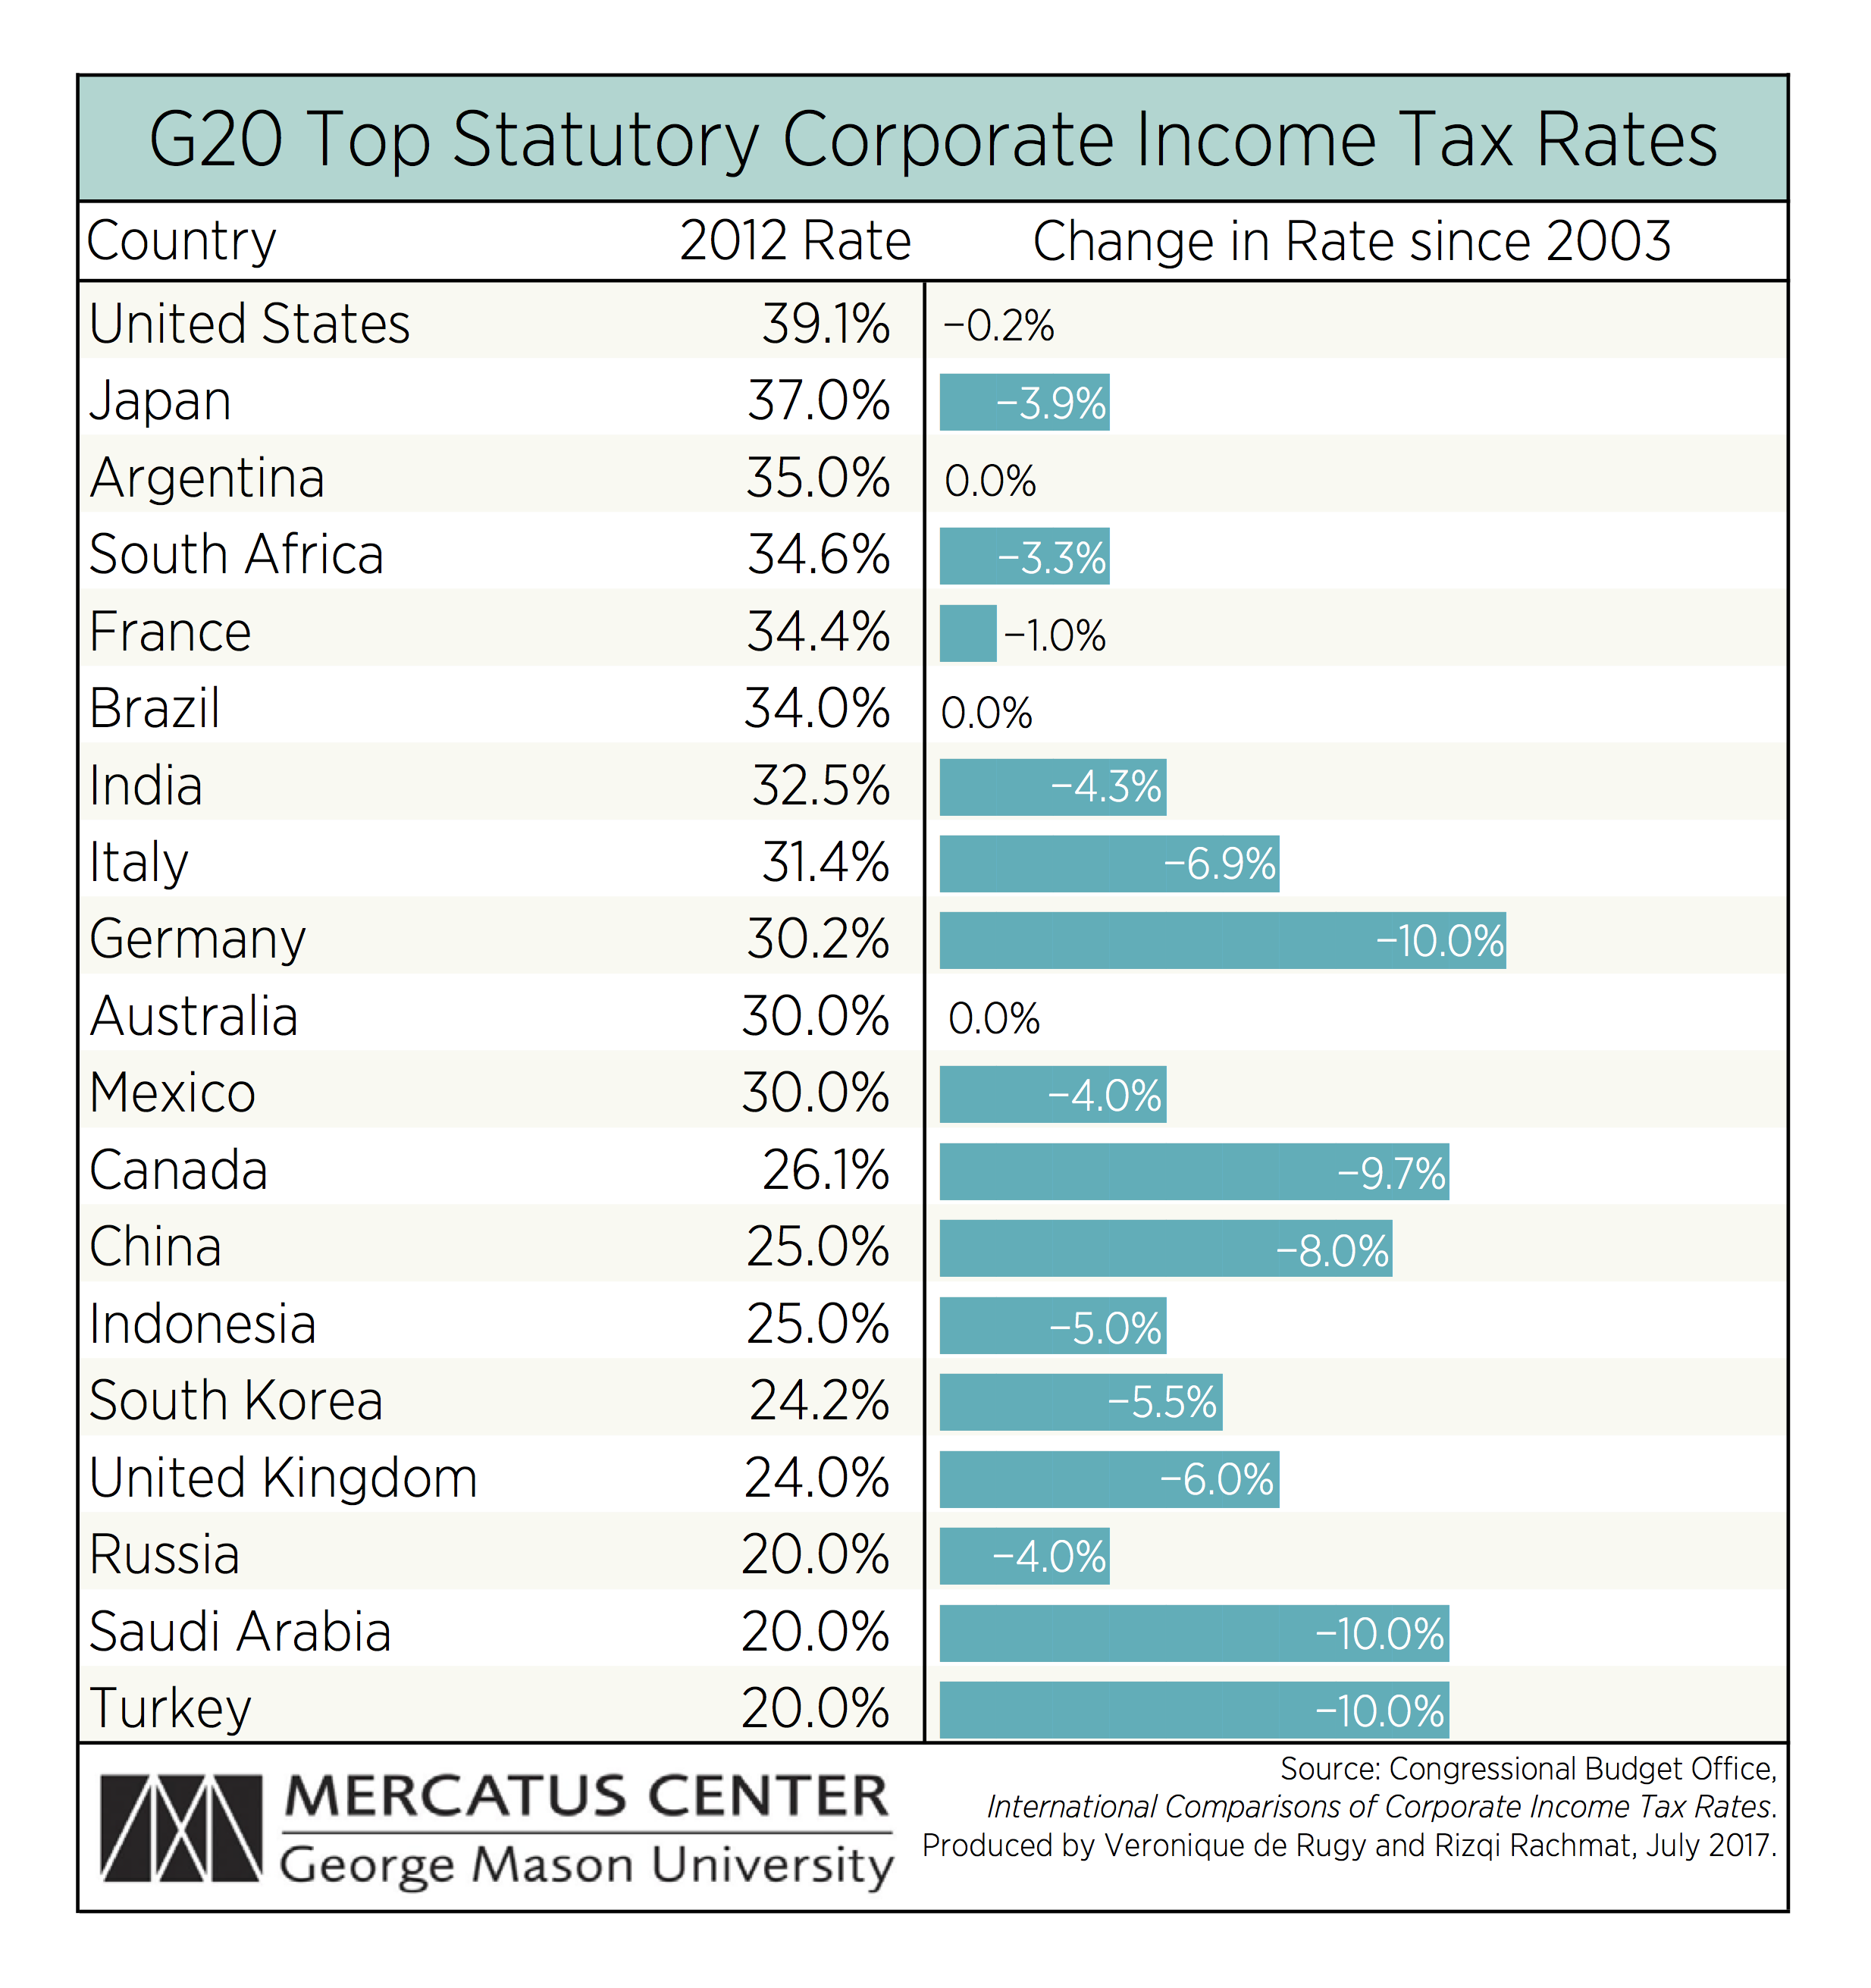 2012 Federal Tax Chart